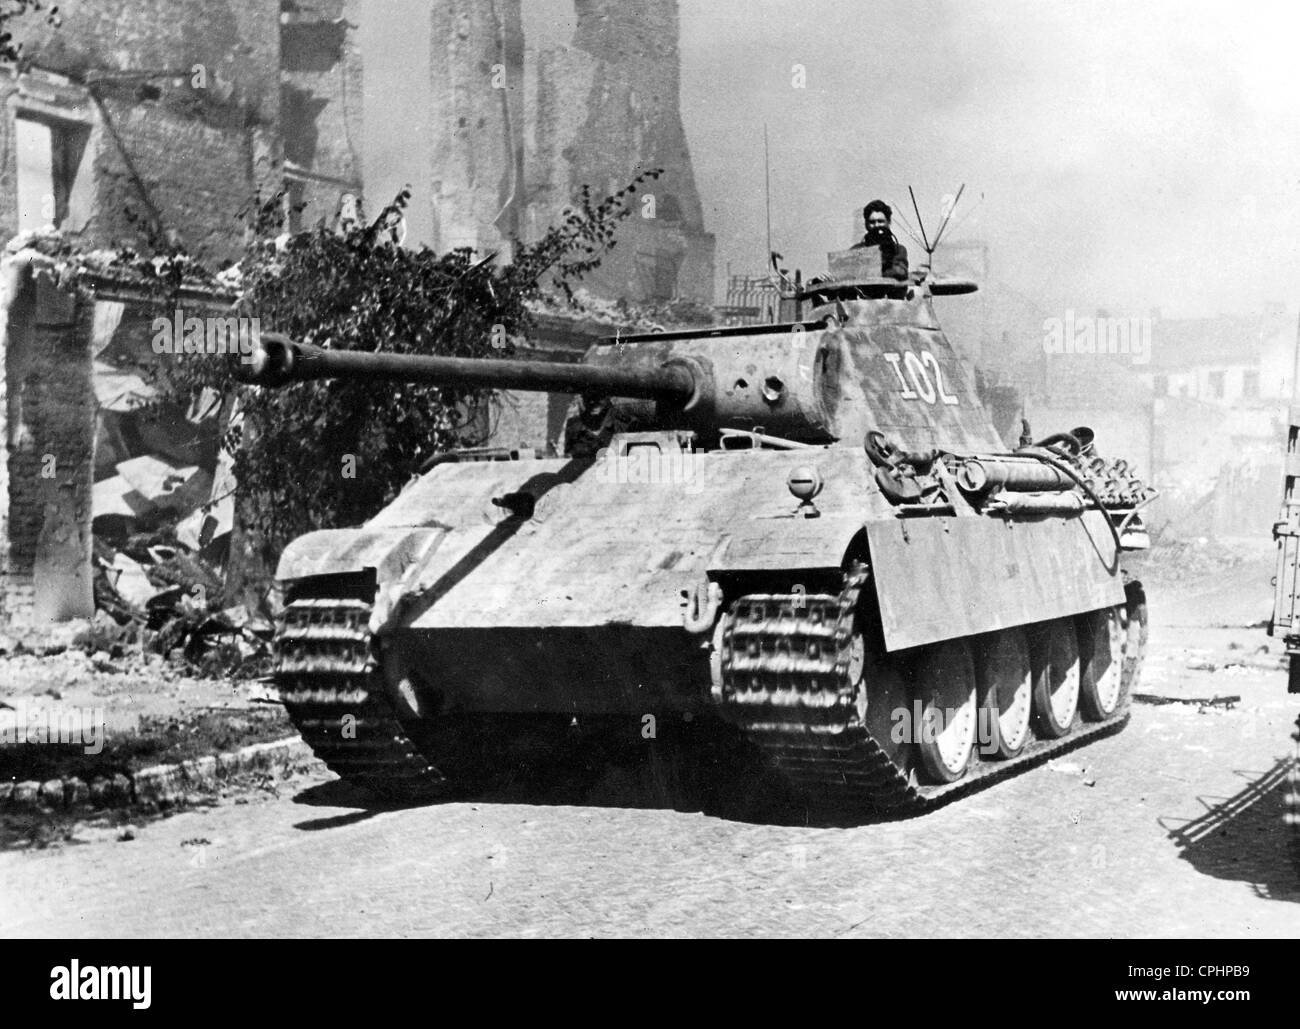 Panzer tank Black and White Stock Photos & Images - Alamy